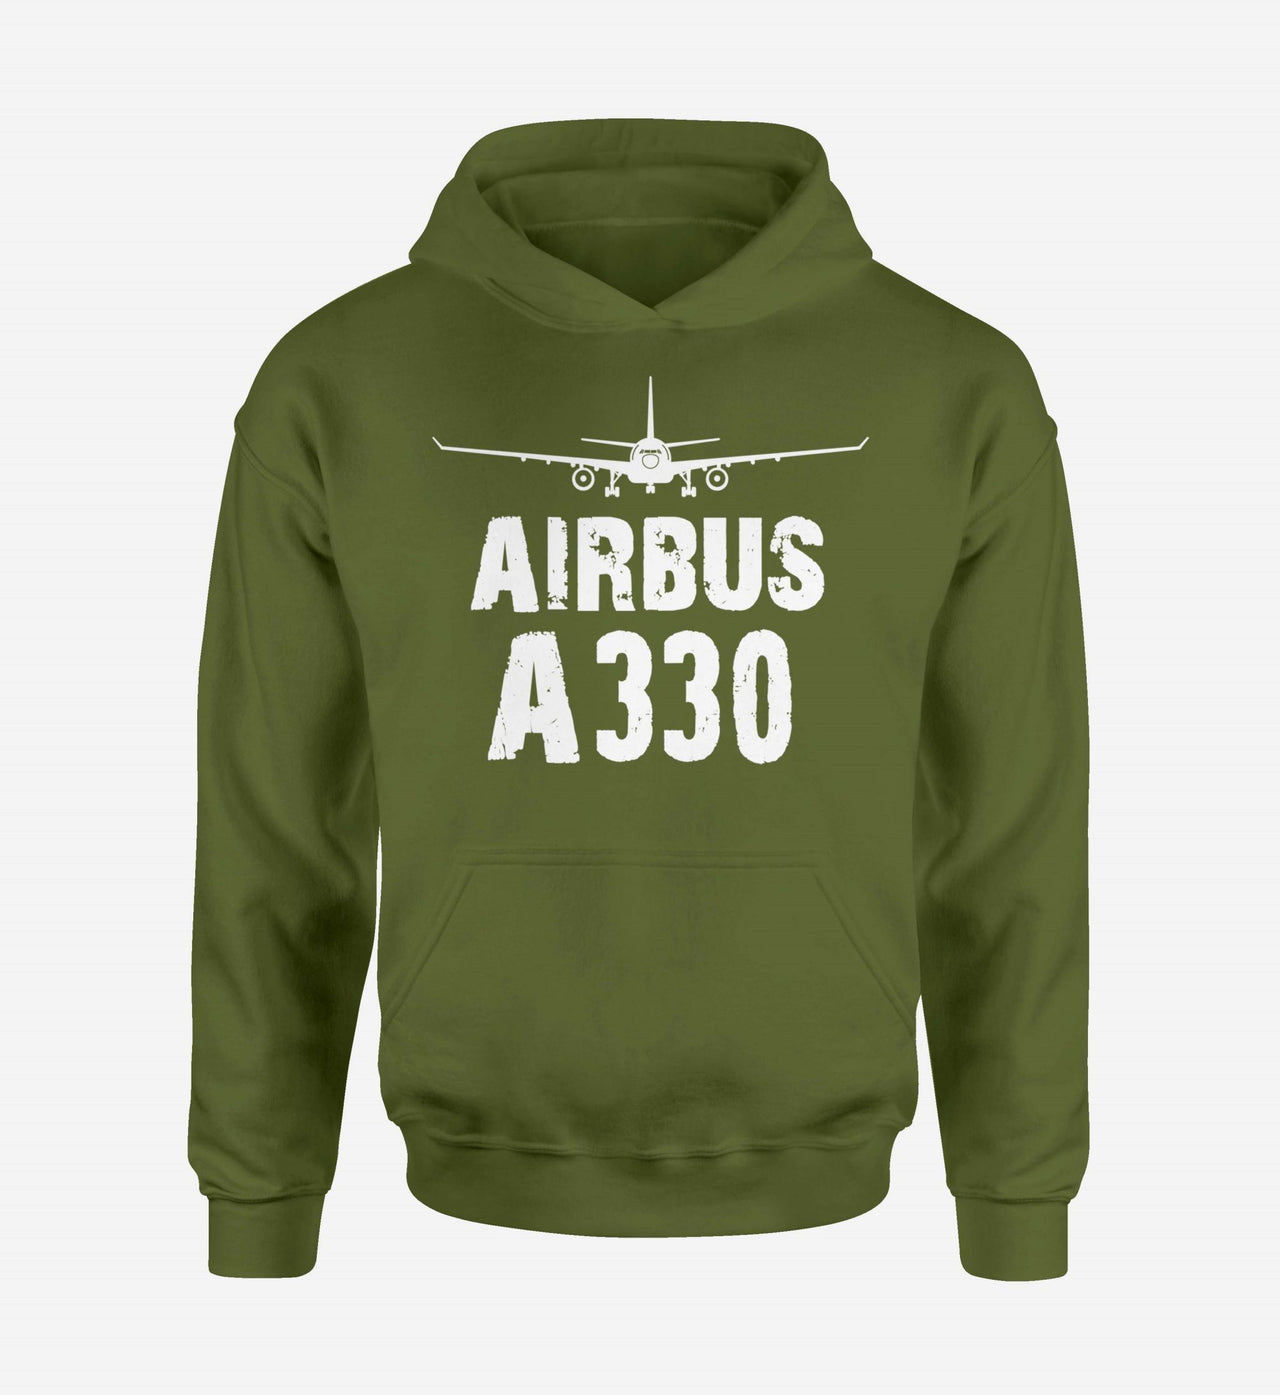 Airbus A330 & Plane Designed Hoodies